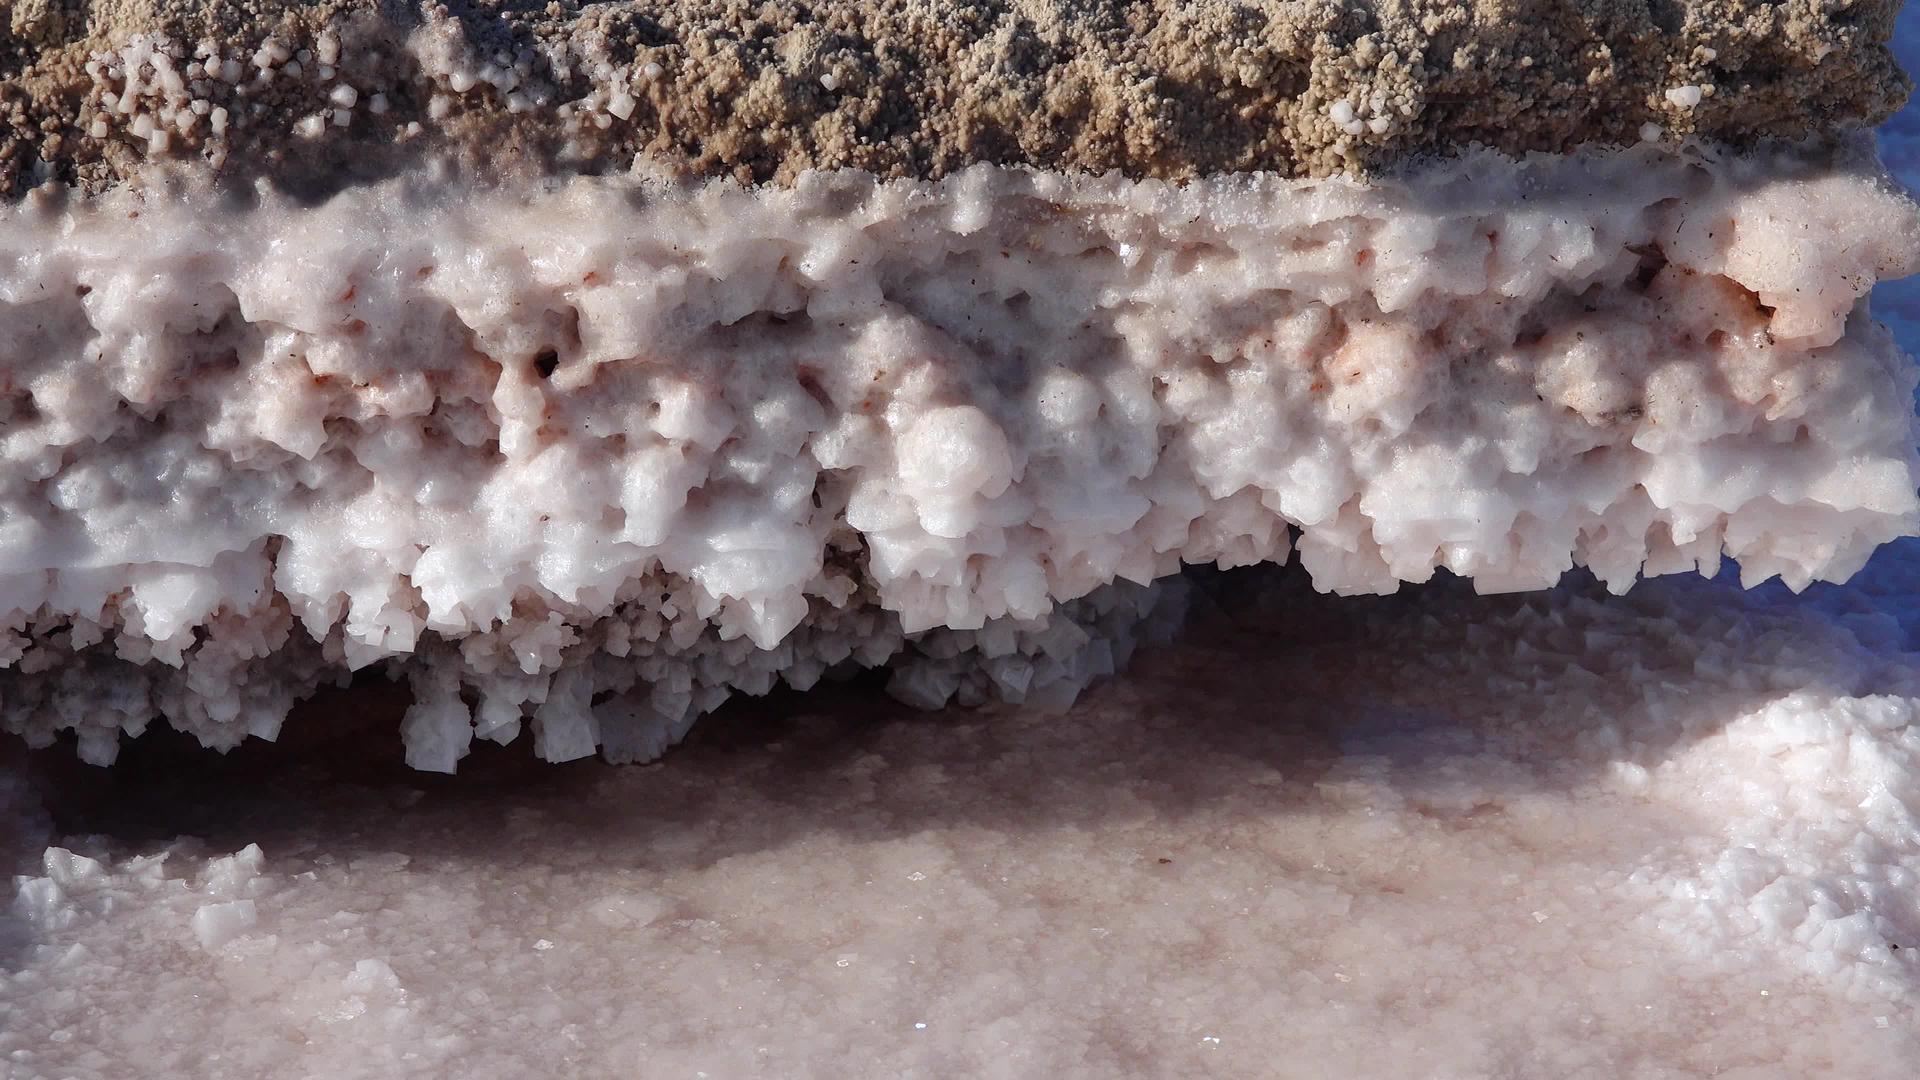 Kuyalnik河口黑海盐晶体覆盖盐湖岸边的石头视频的预览图